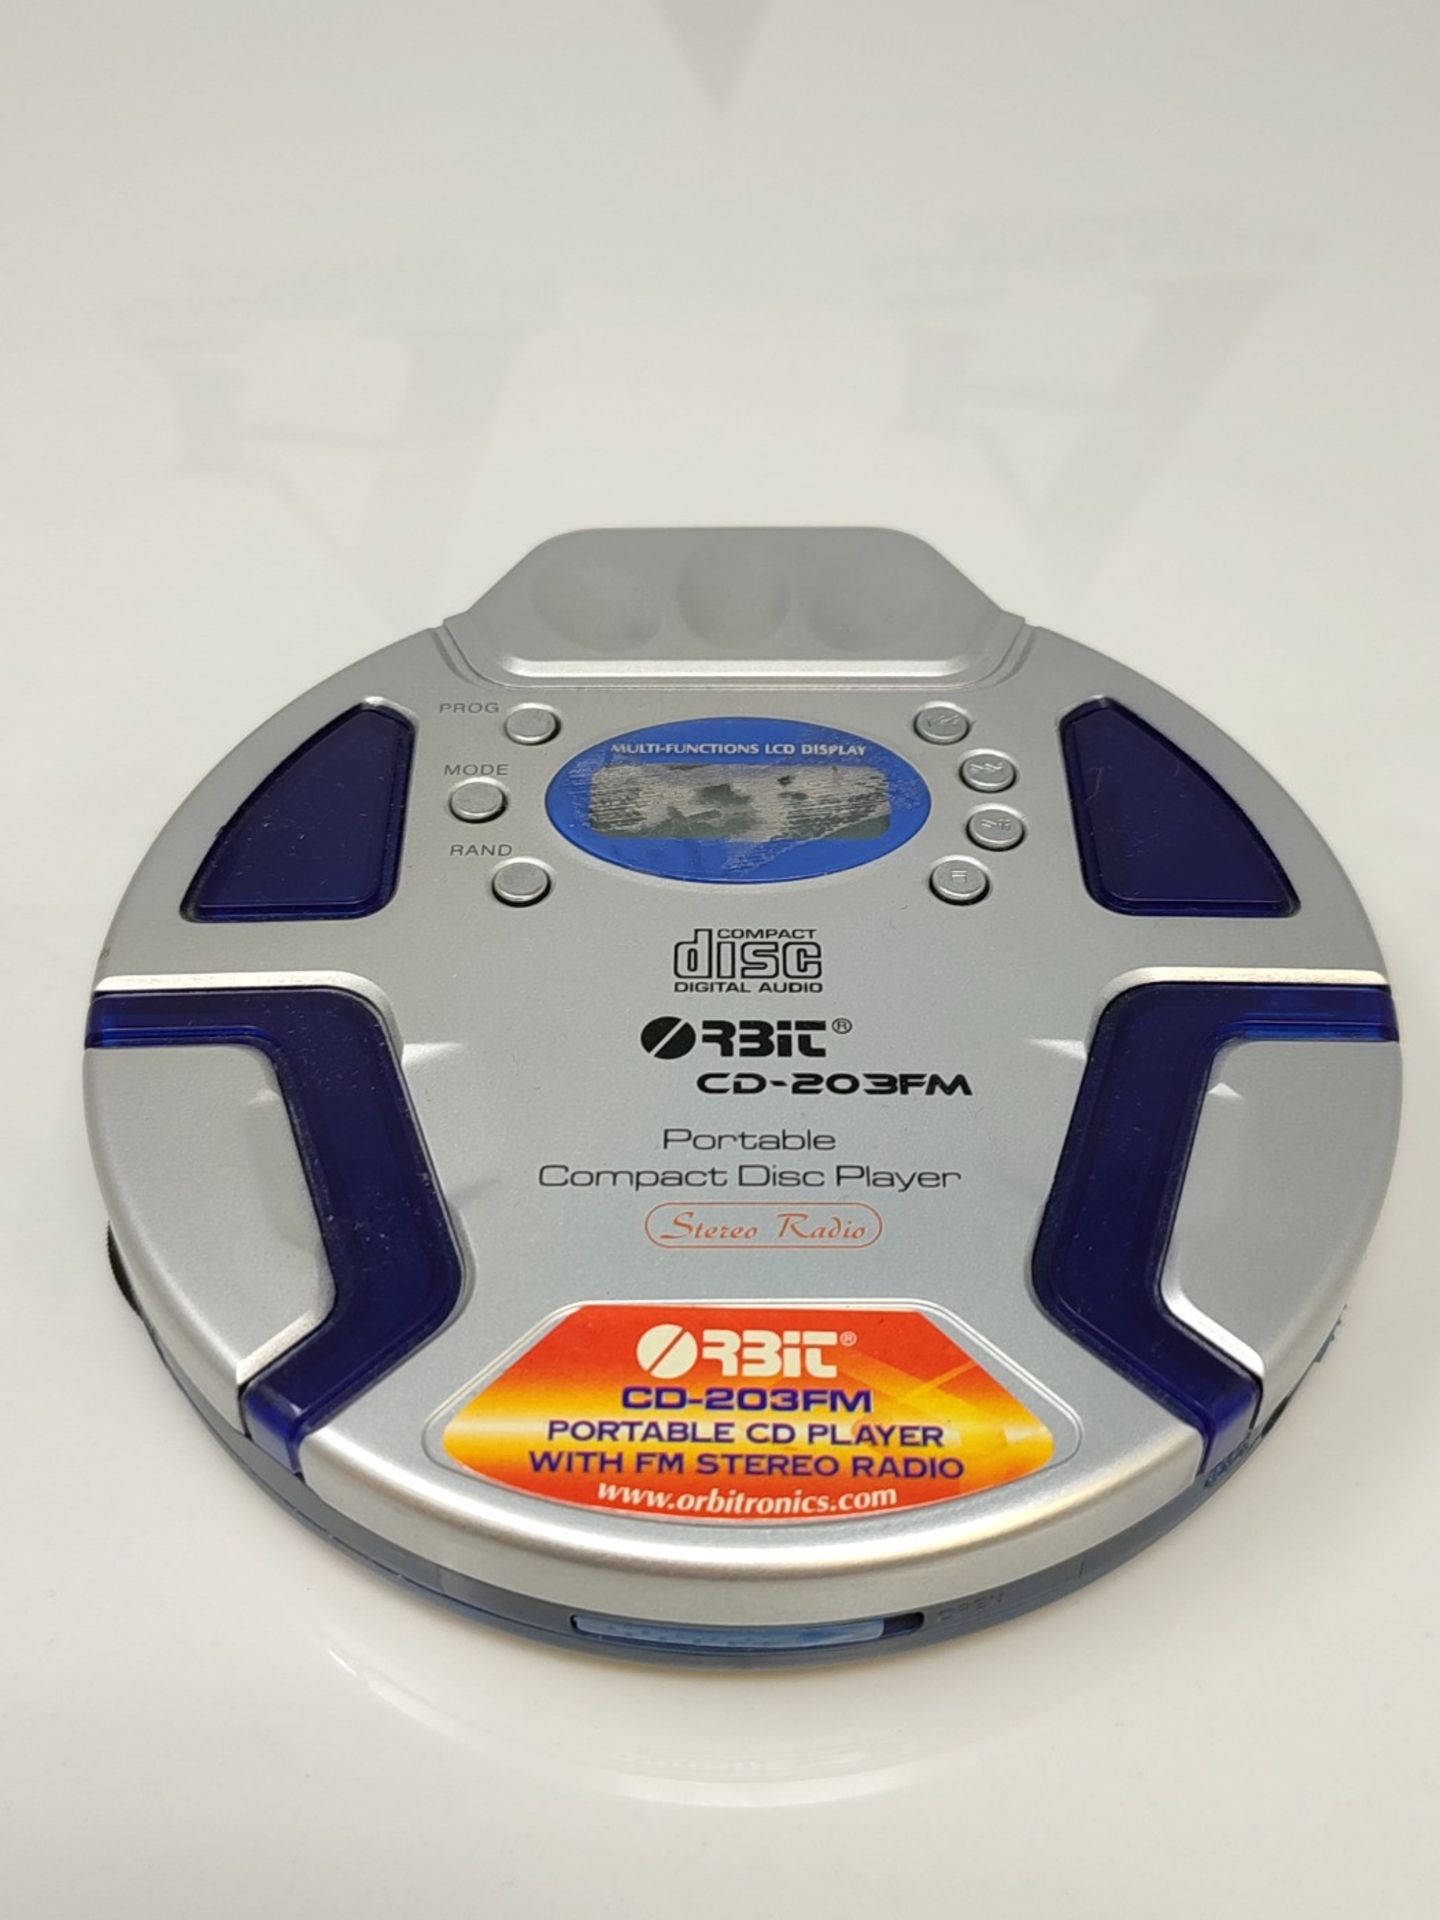 Orbit Disc Compact Digital Audio CD-203FM - Image 3 of 3